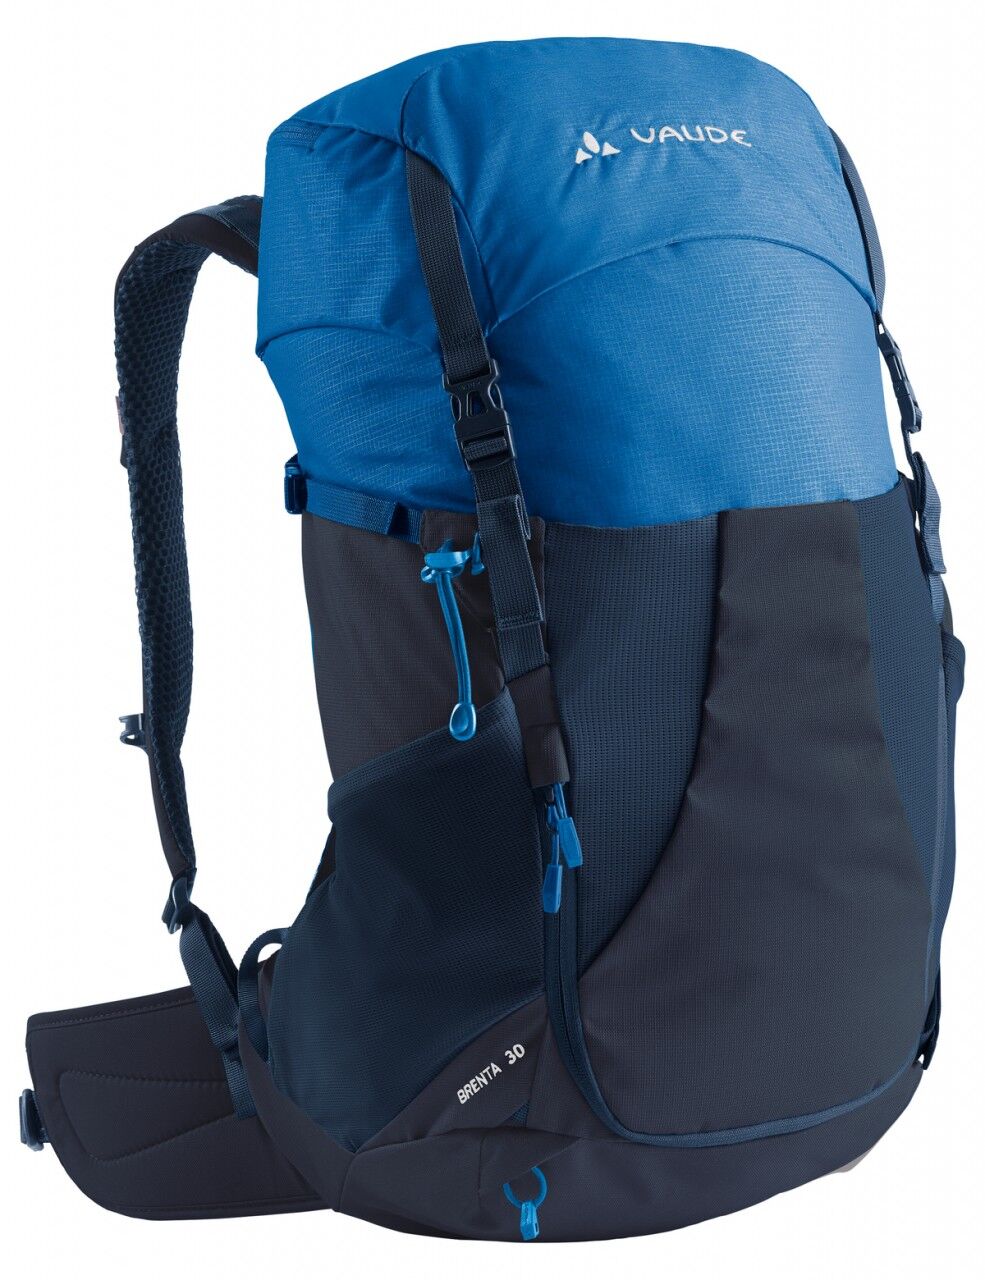 Vaude Brenta 30 - Hiking backpack